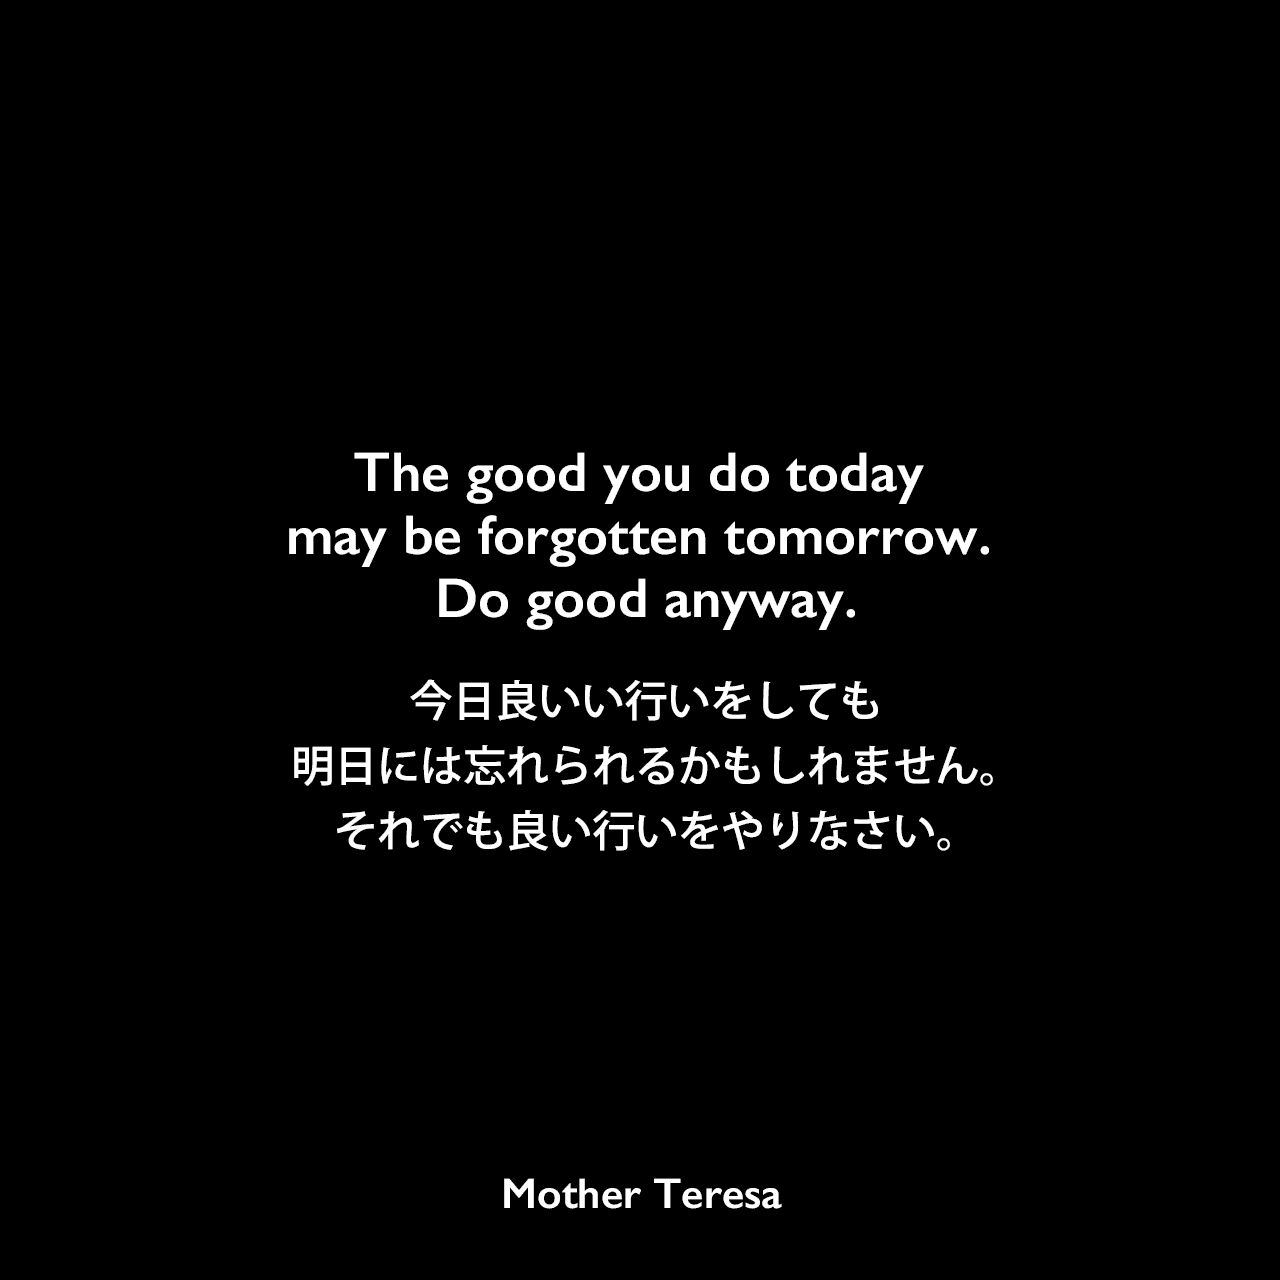 The good you do today may be forgotten tomorrow. Do good anyway.今日良いい行いをしても、明日には忘れられるかもしれません。それでも良い行いをやりなさい。Mother Teresa